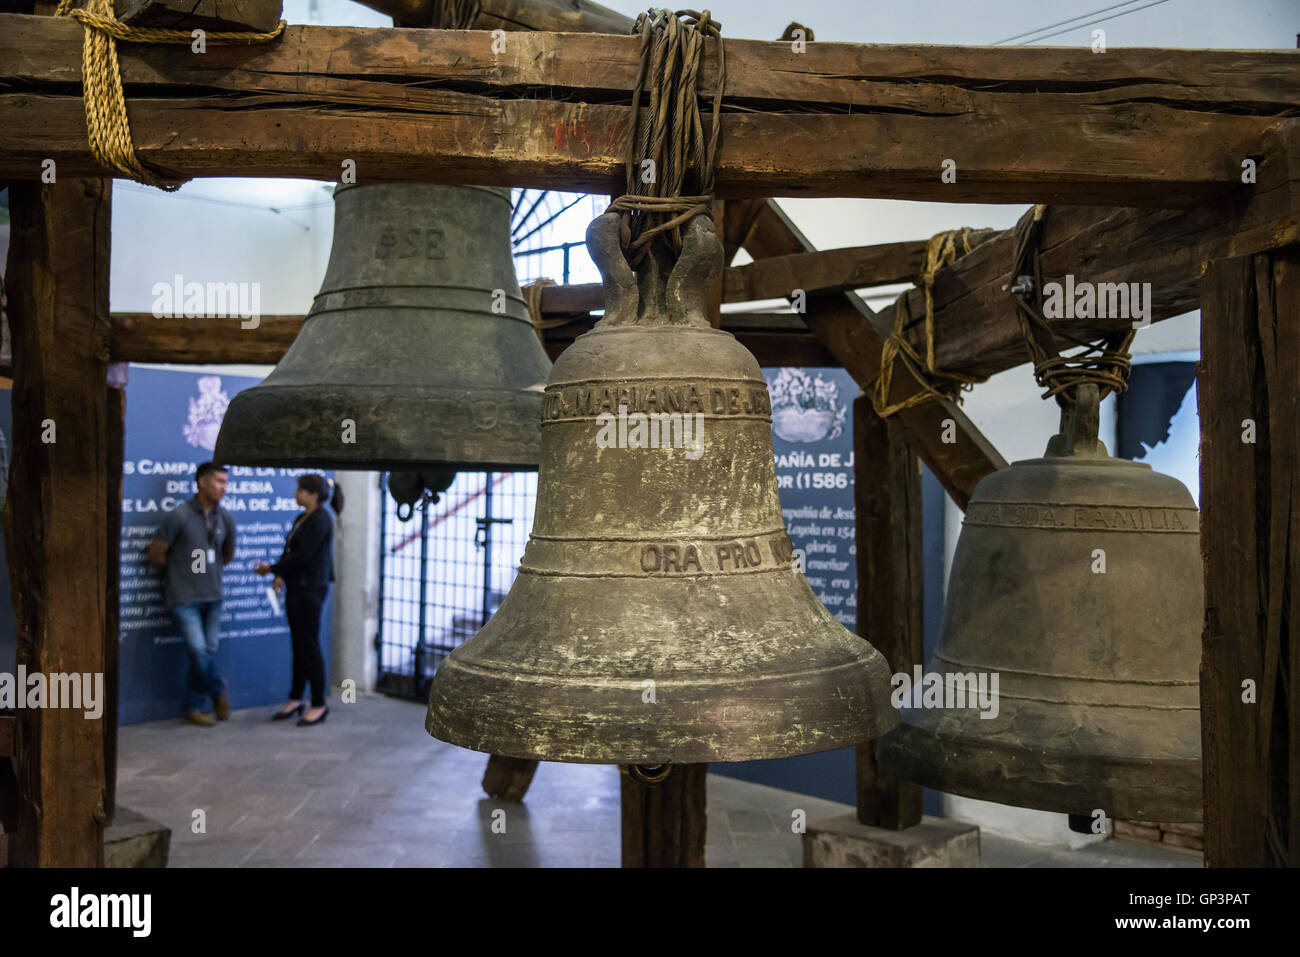 Ancient church bells in Ukraine Stock Photo - Alamy